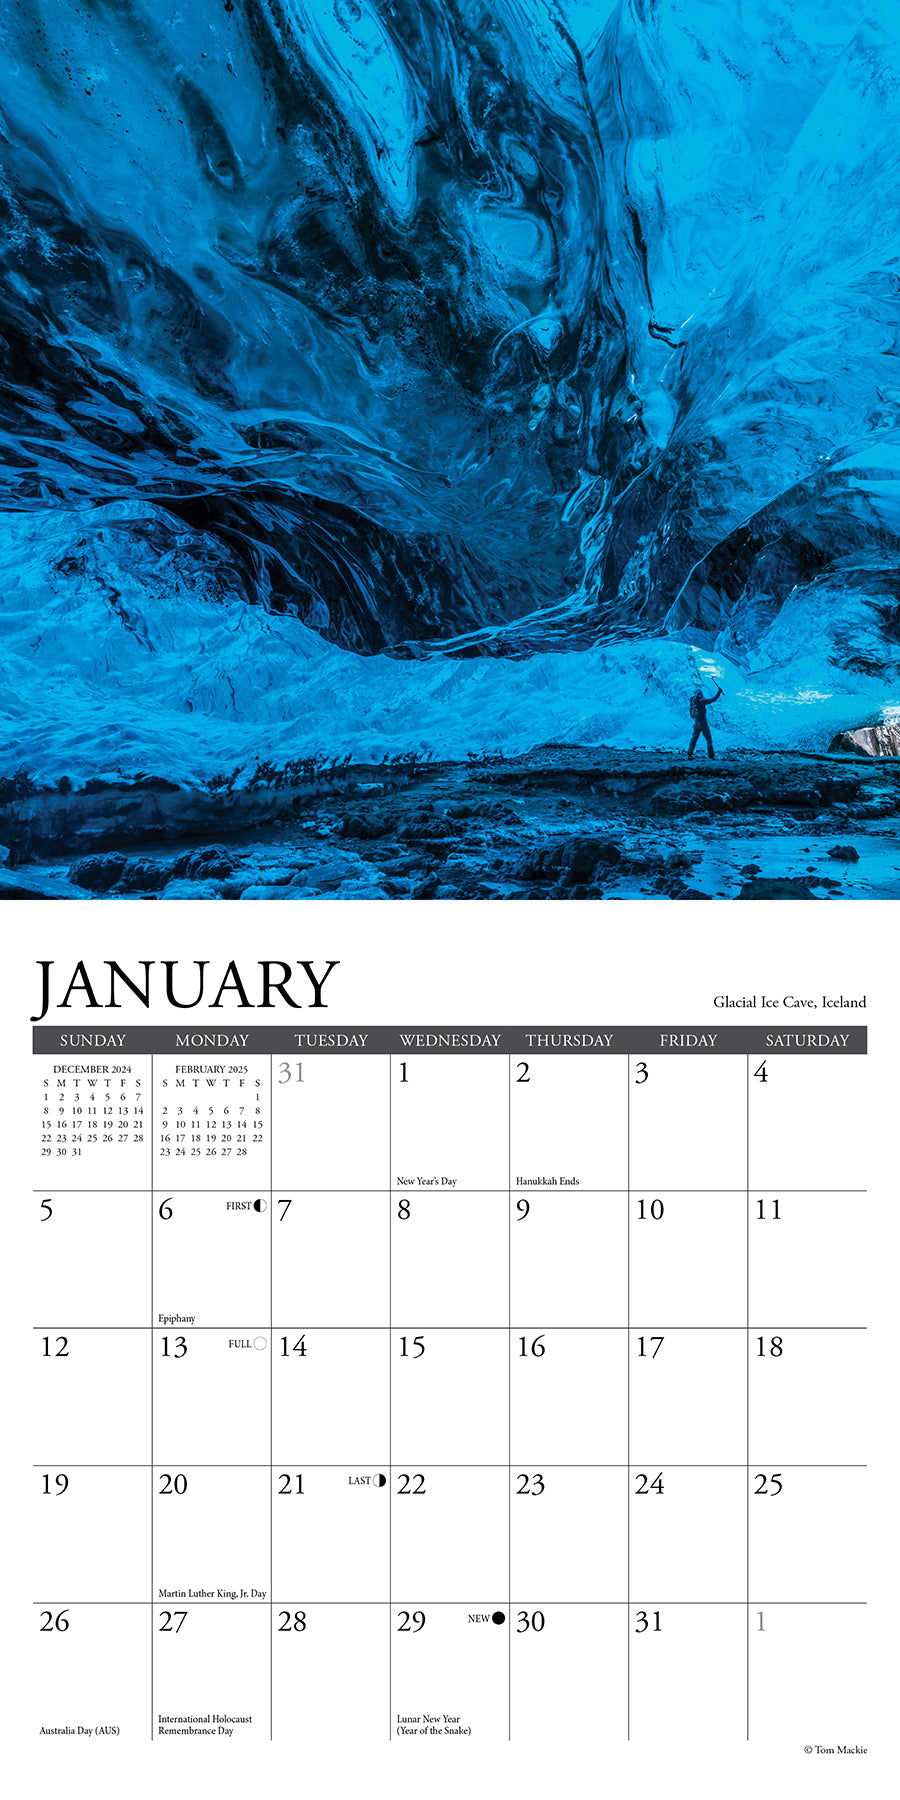 2025 Wanderlust - Mini Wall Calendar (US Only)